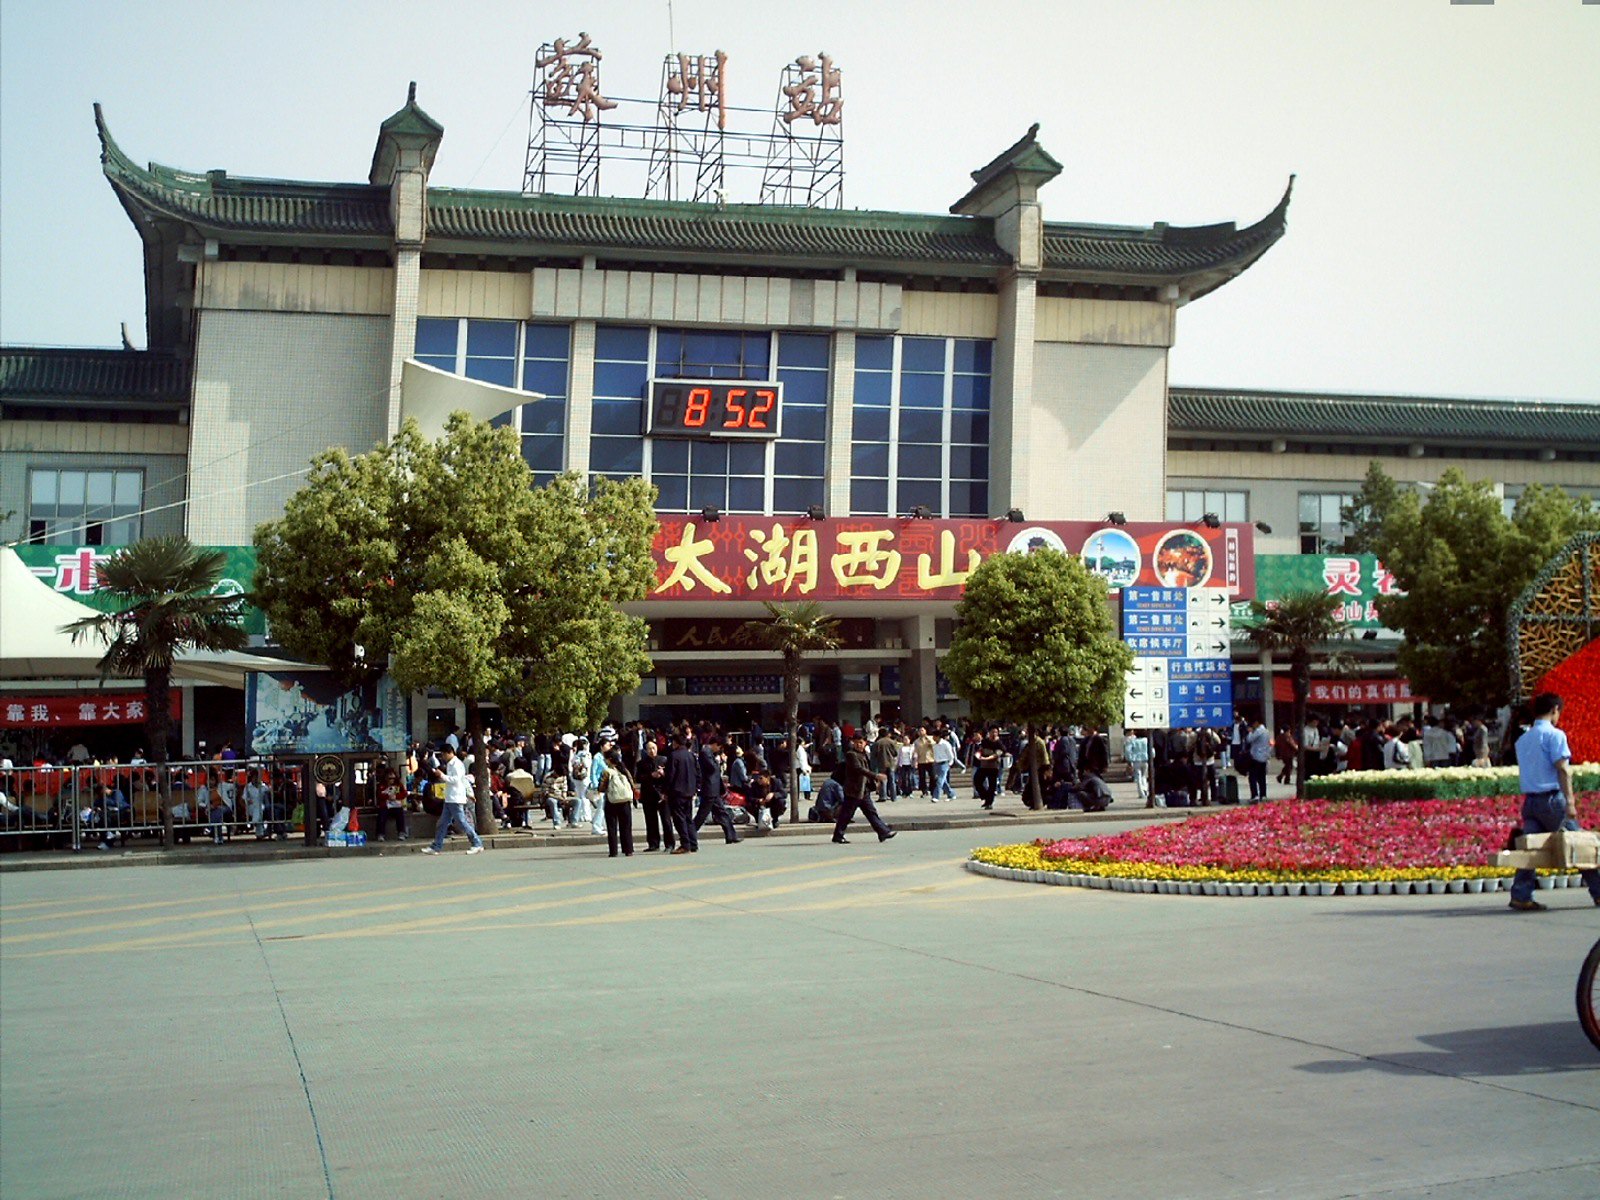 2006-04-29: Suzhou